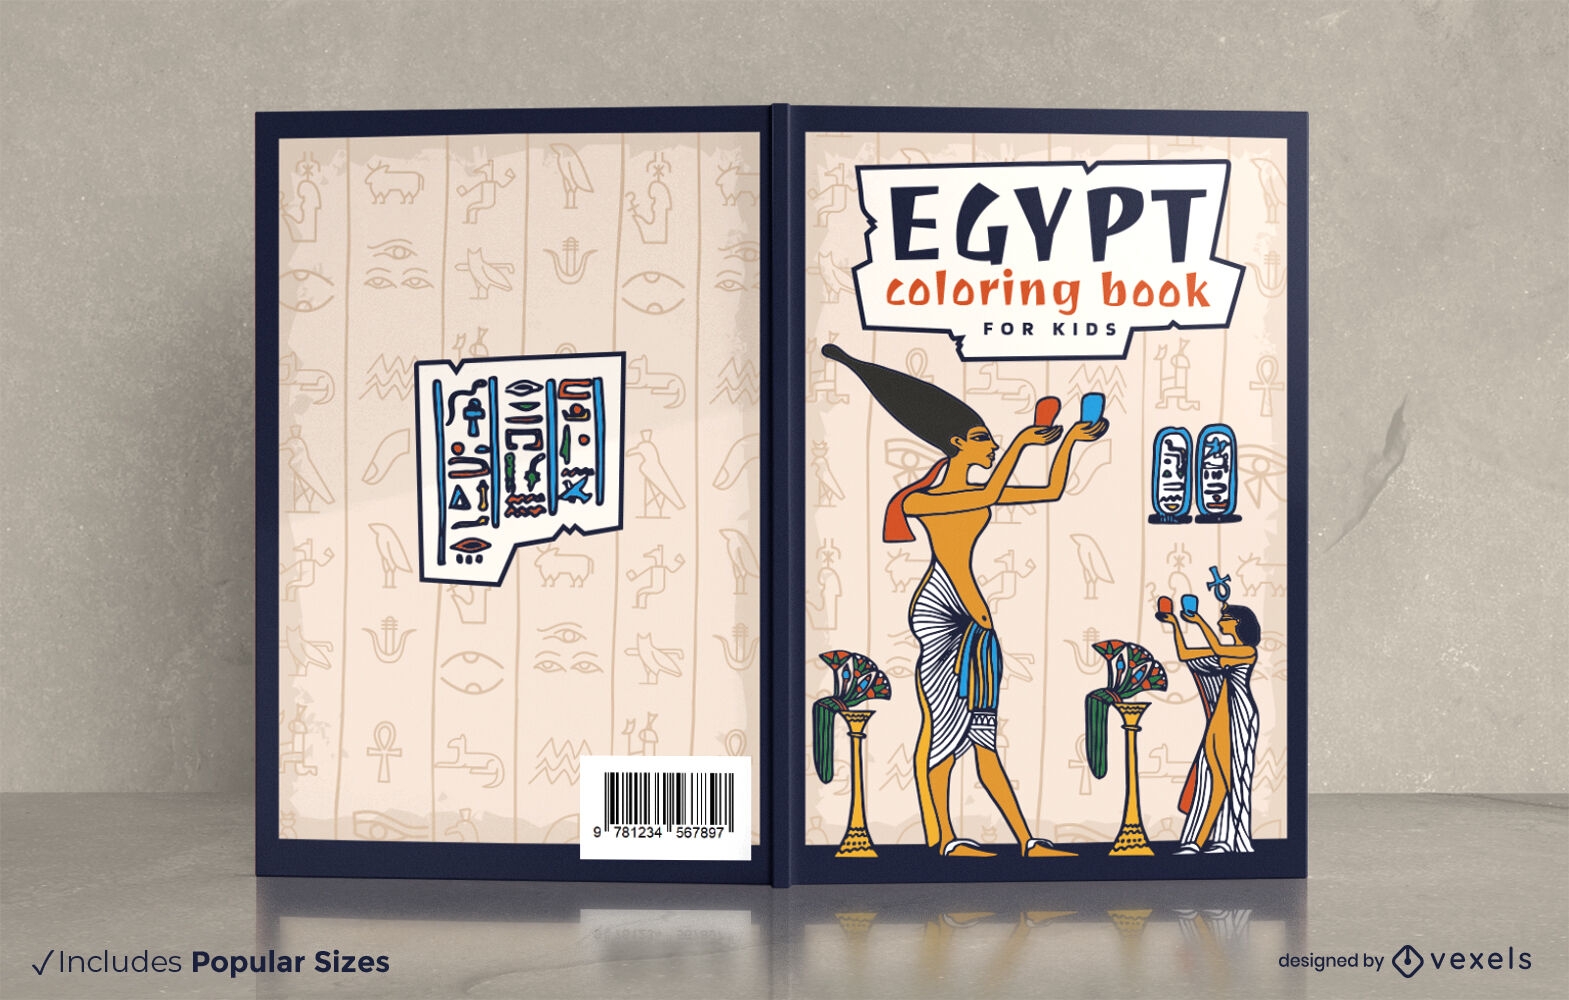 Egypt coloring book cover design